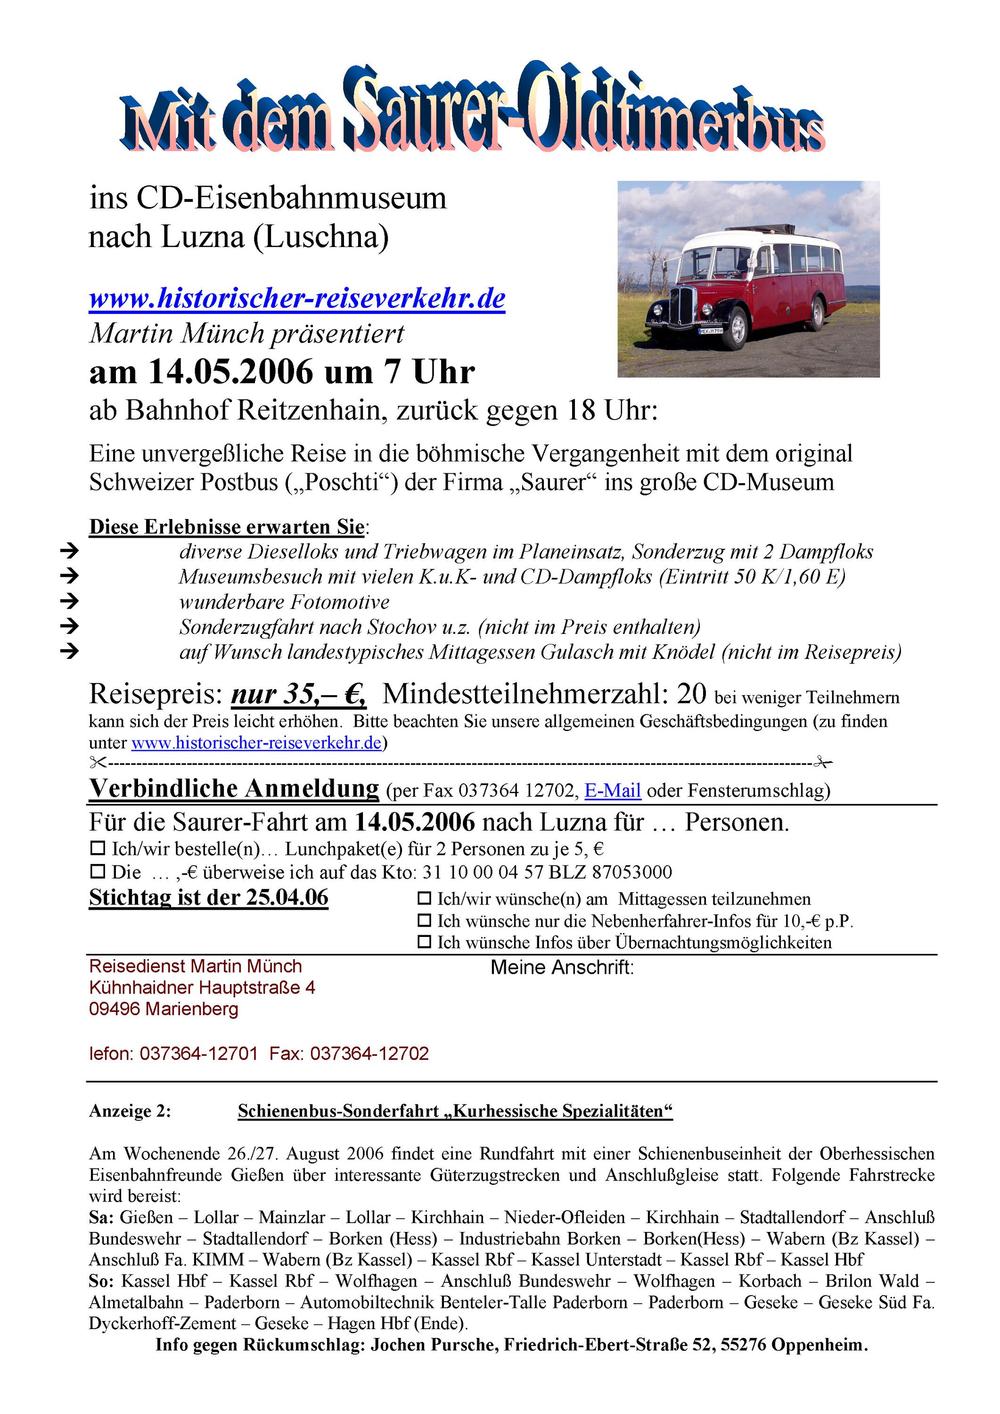 Veranstaltungsankündigung 14. Mai 2006: Mit dem Saurer-Oldtimerbus ins CD-Eisenbahnmuseum nach Luzna (Luschna)